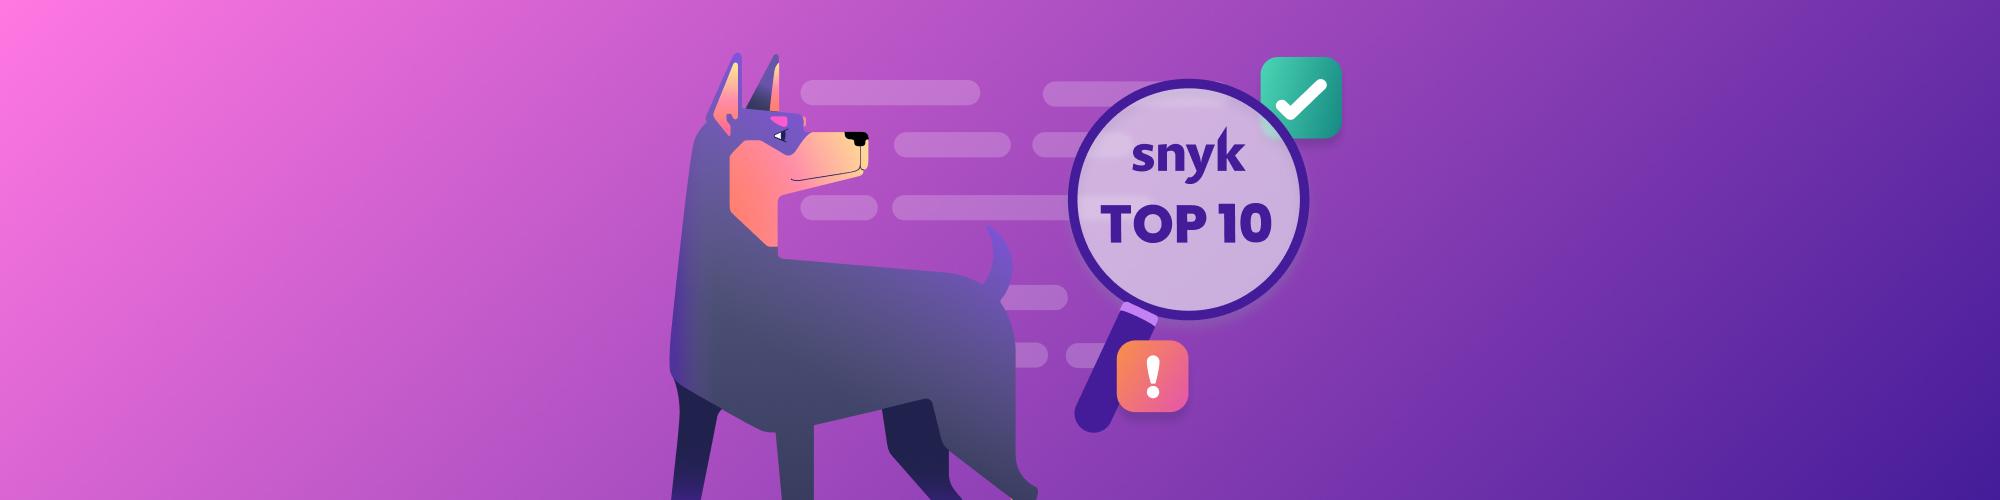 snyk-top-10/blog-hero-snyk-top-10-oss-2022